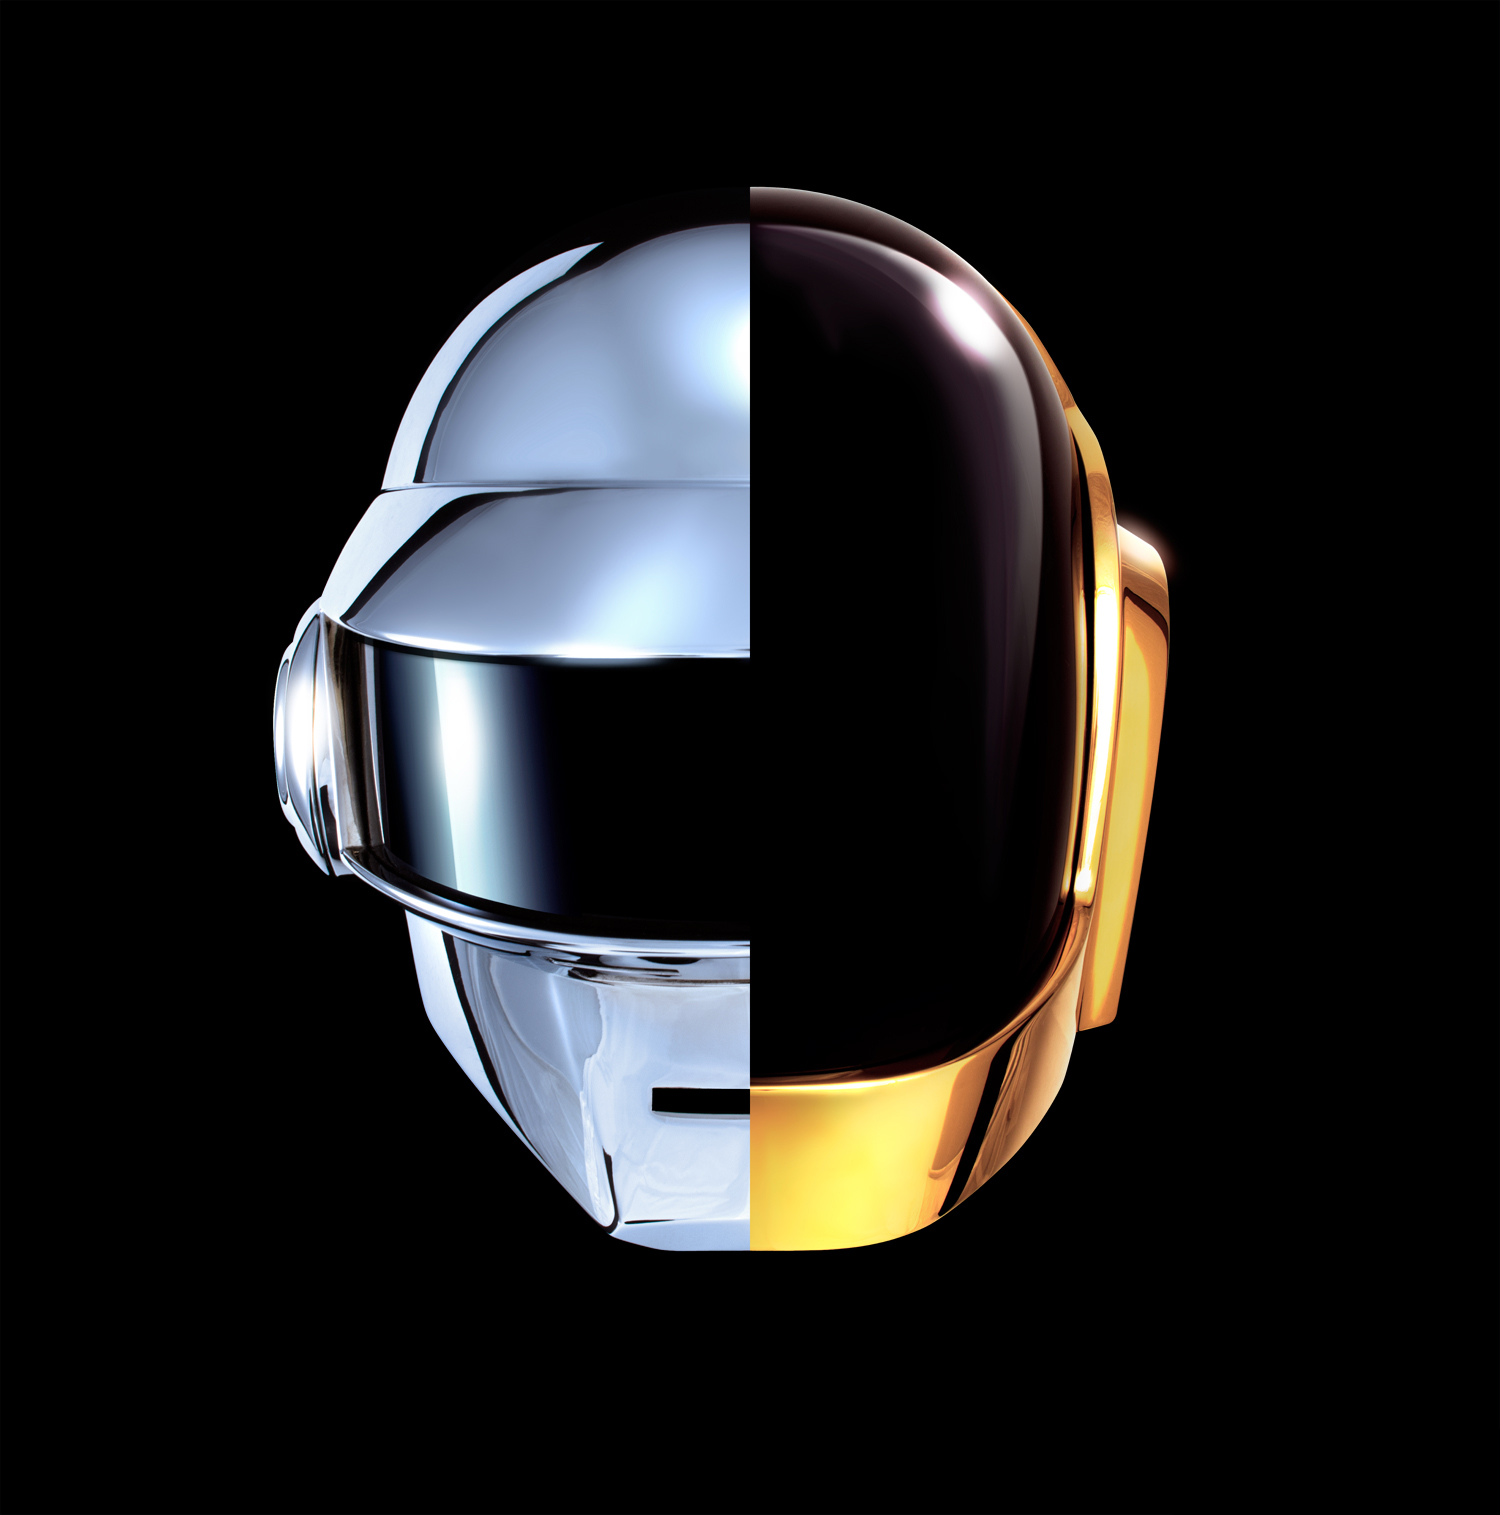 Daft-Punk-Helmets-Columbia-Album-artwork%20copy.jpg